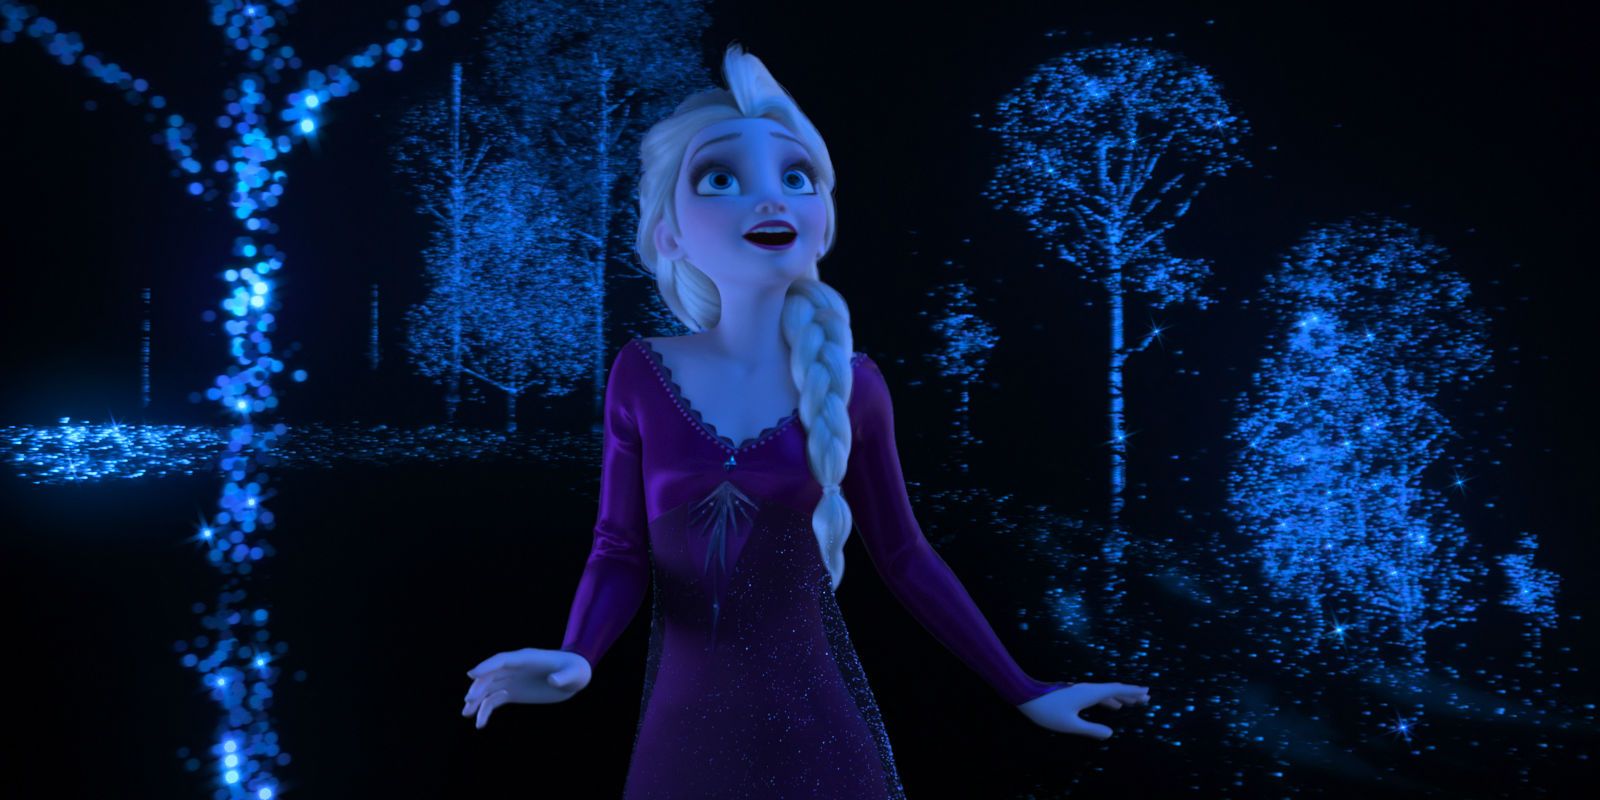 Frozen 2 Surpasses Original, Becomes Third Highest Grossing Movie of 2019